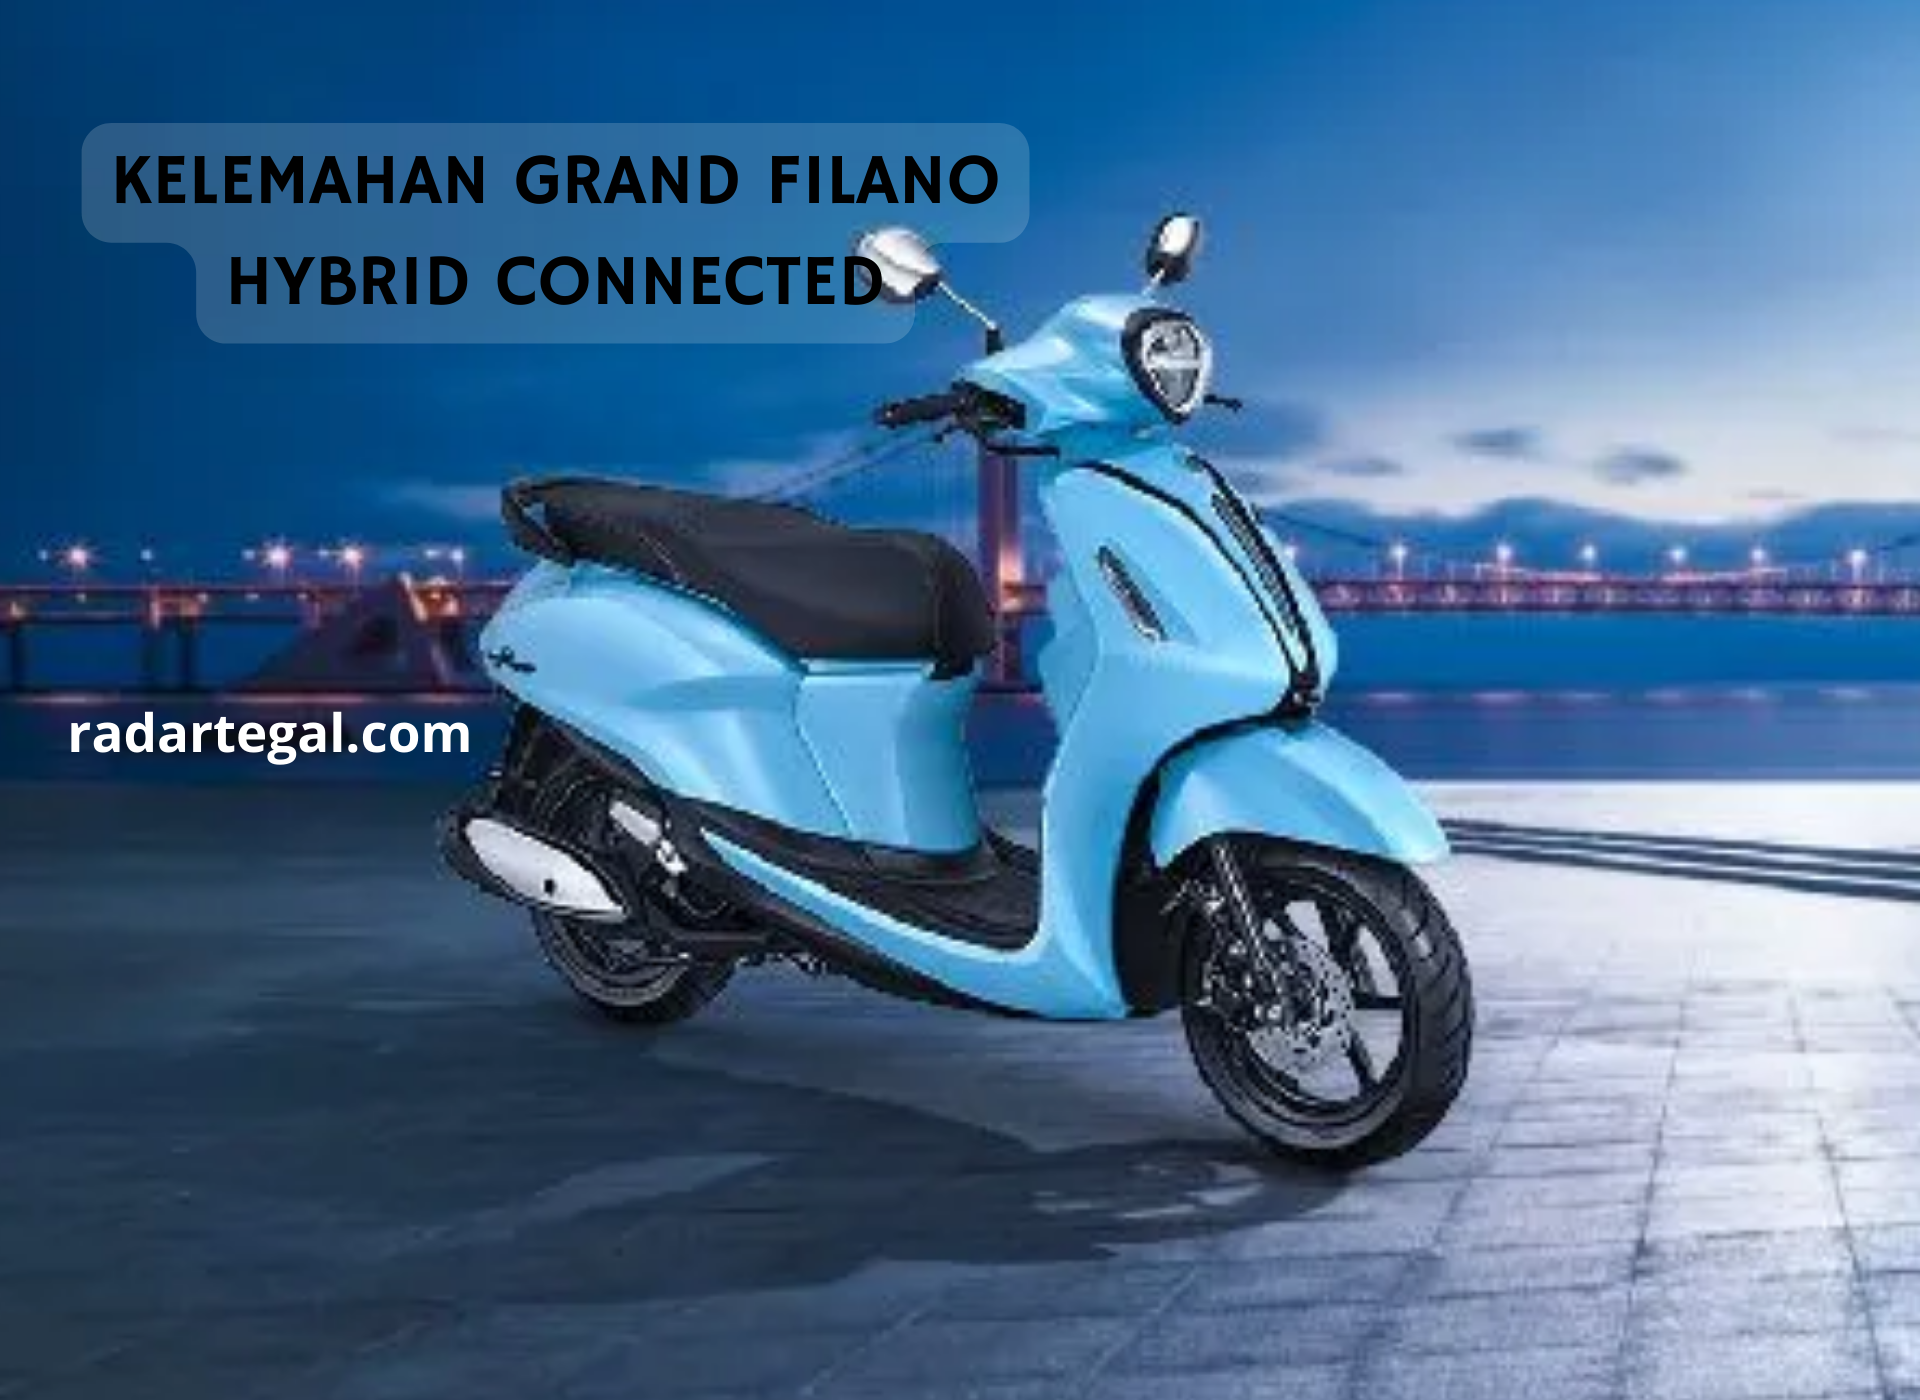 5 Kelemahan Grand Filano Hybrid Connected, Desain Velg Kurang Pas?